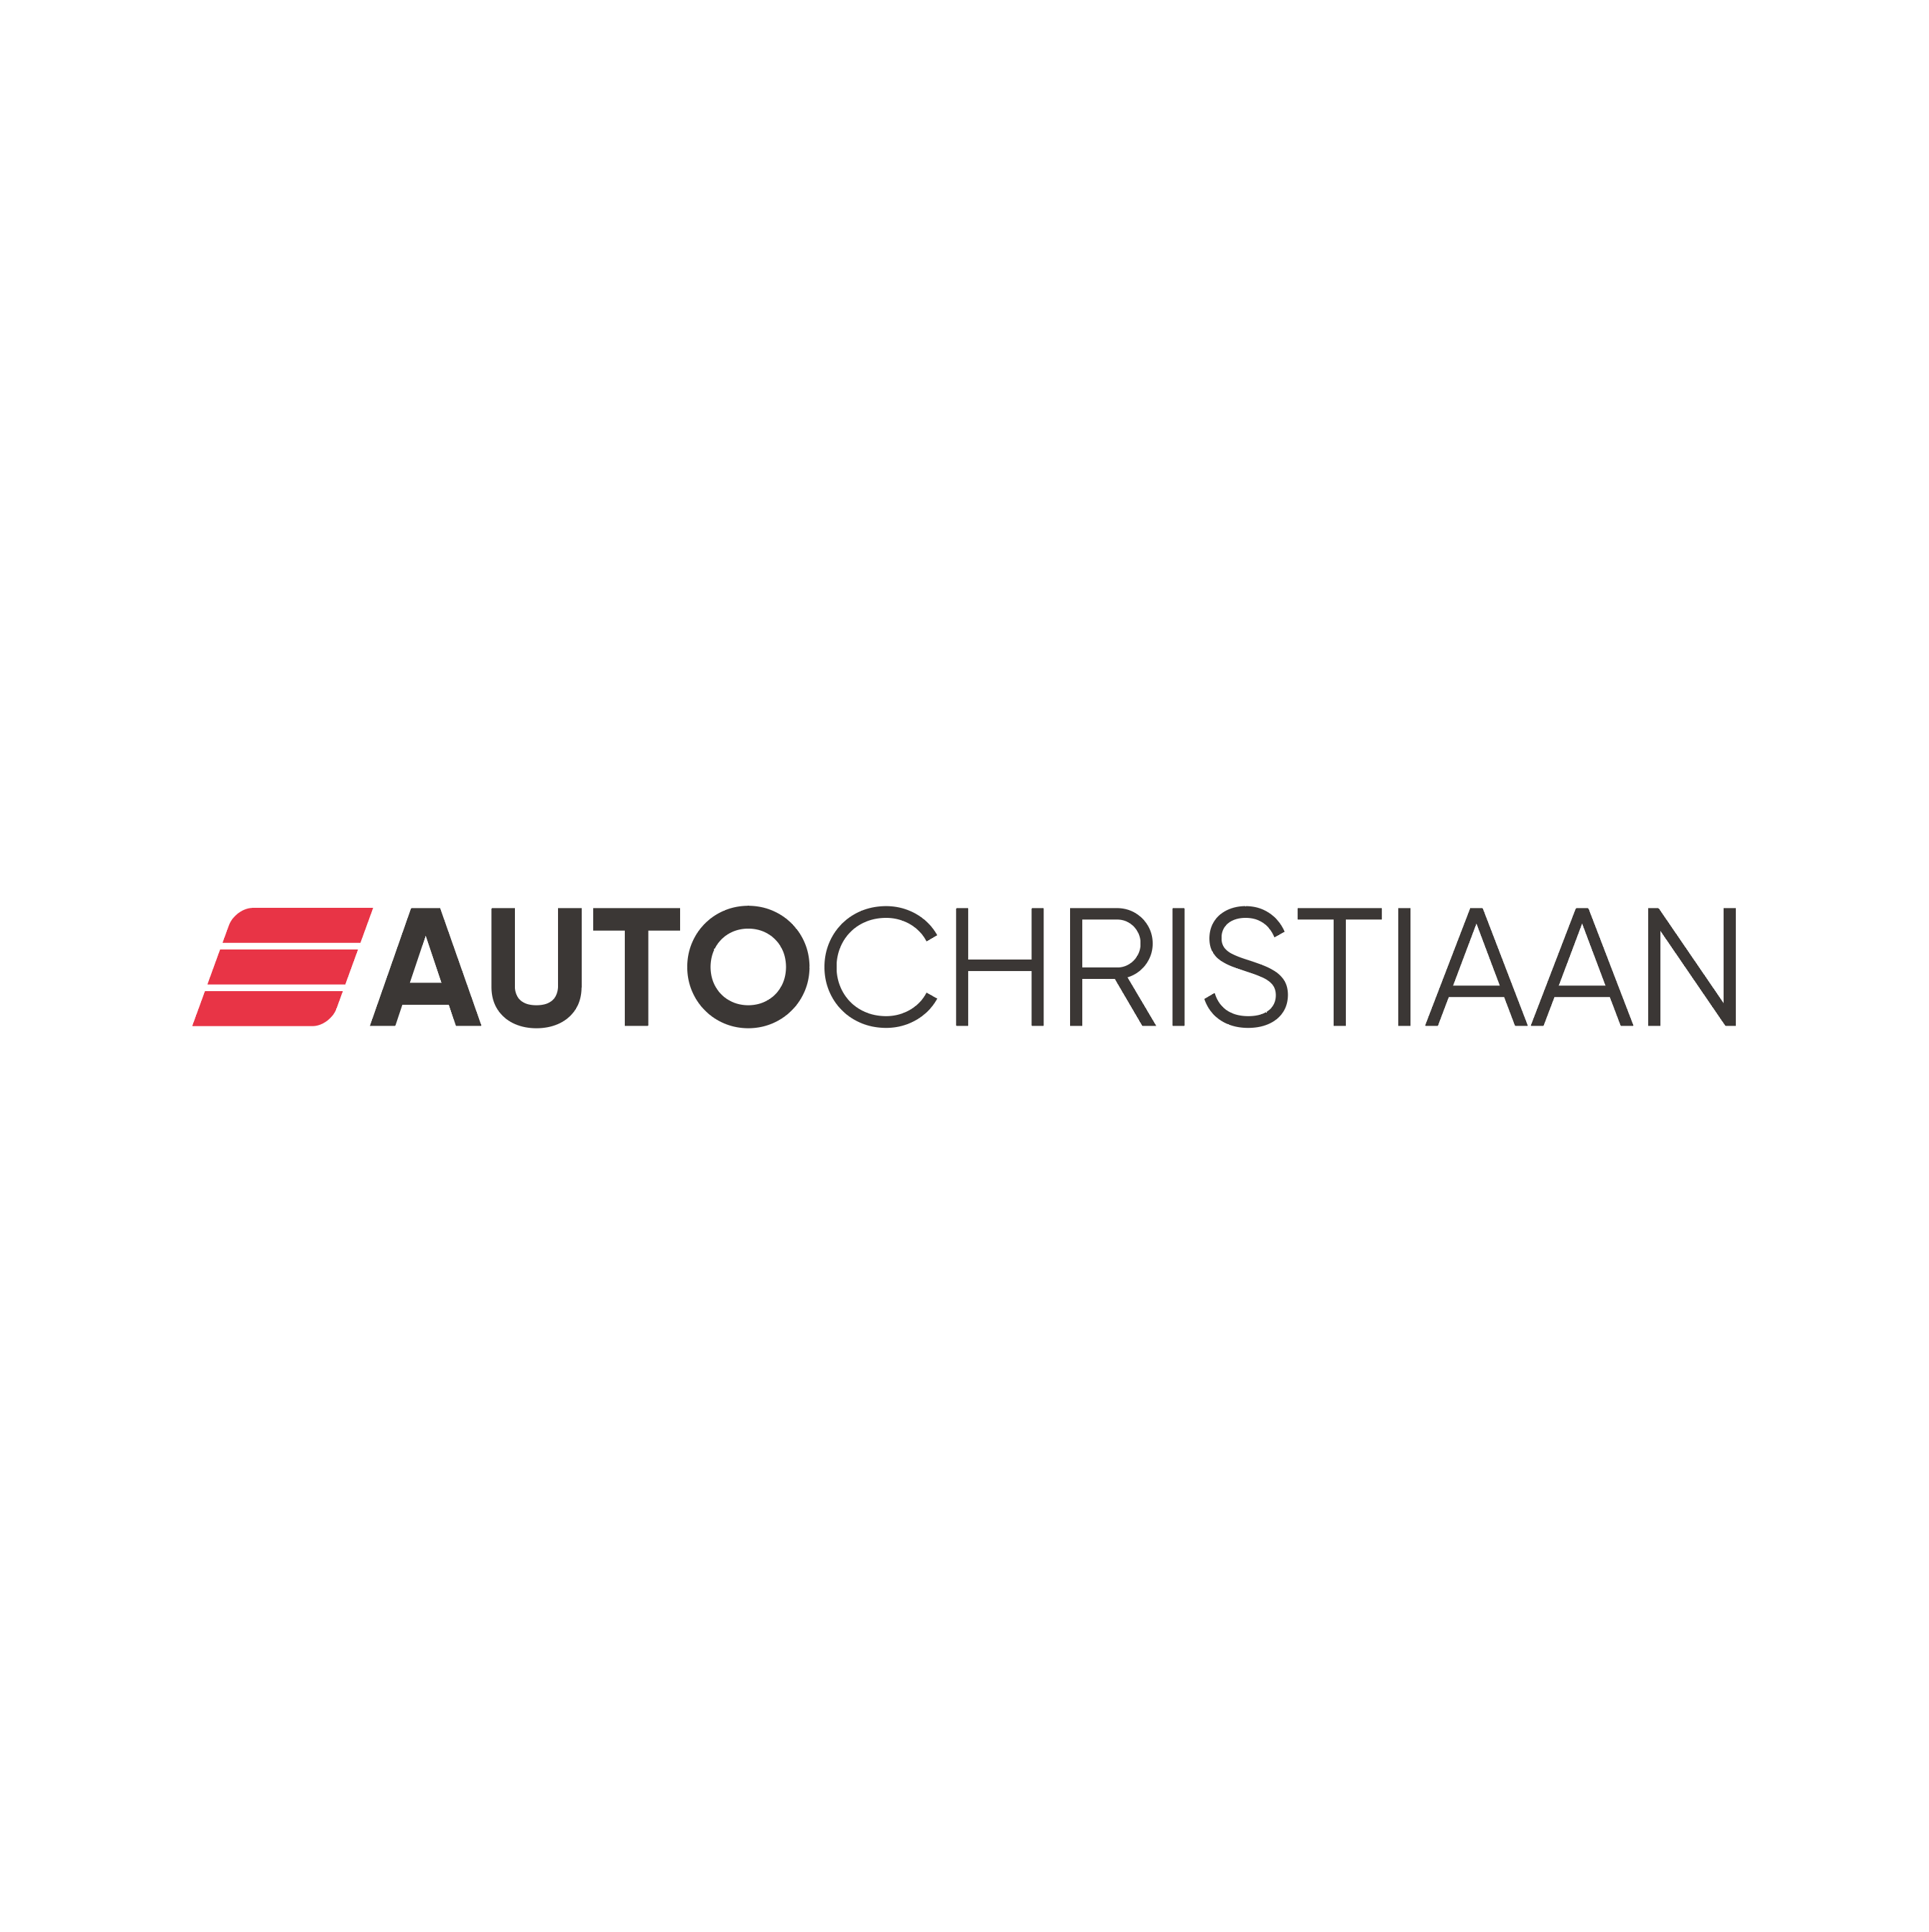 Auto Christiaan Sponsor